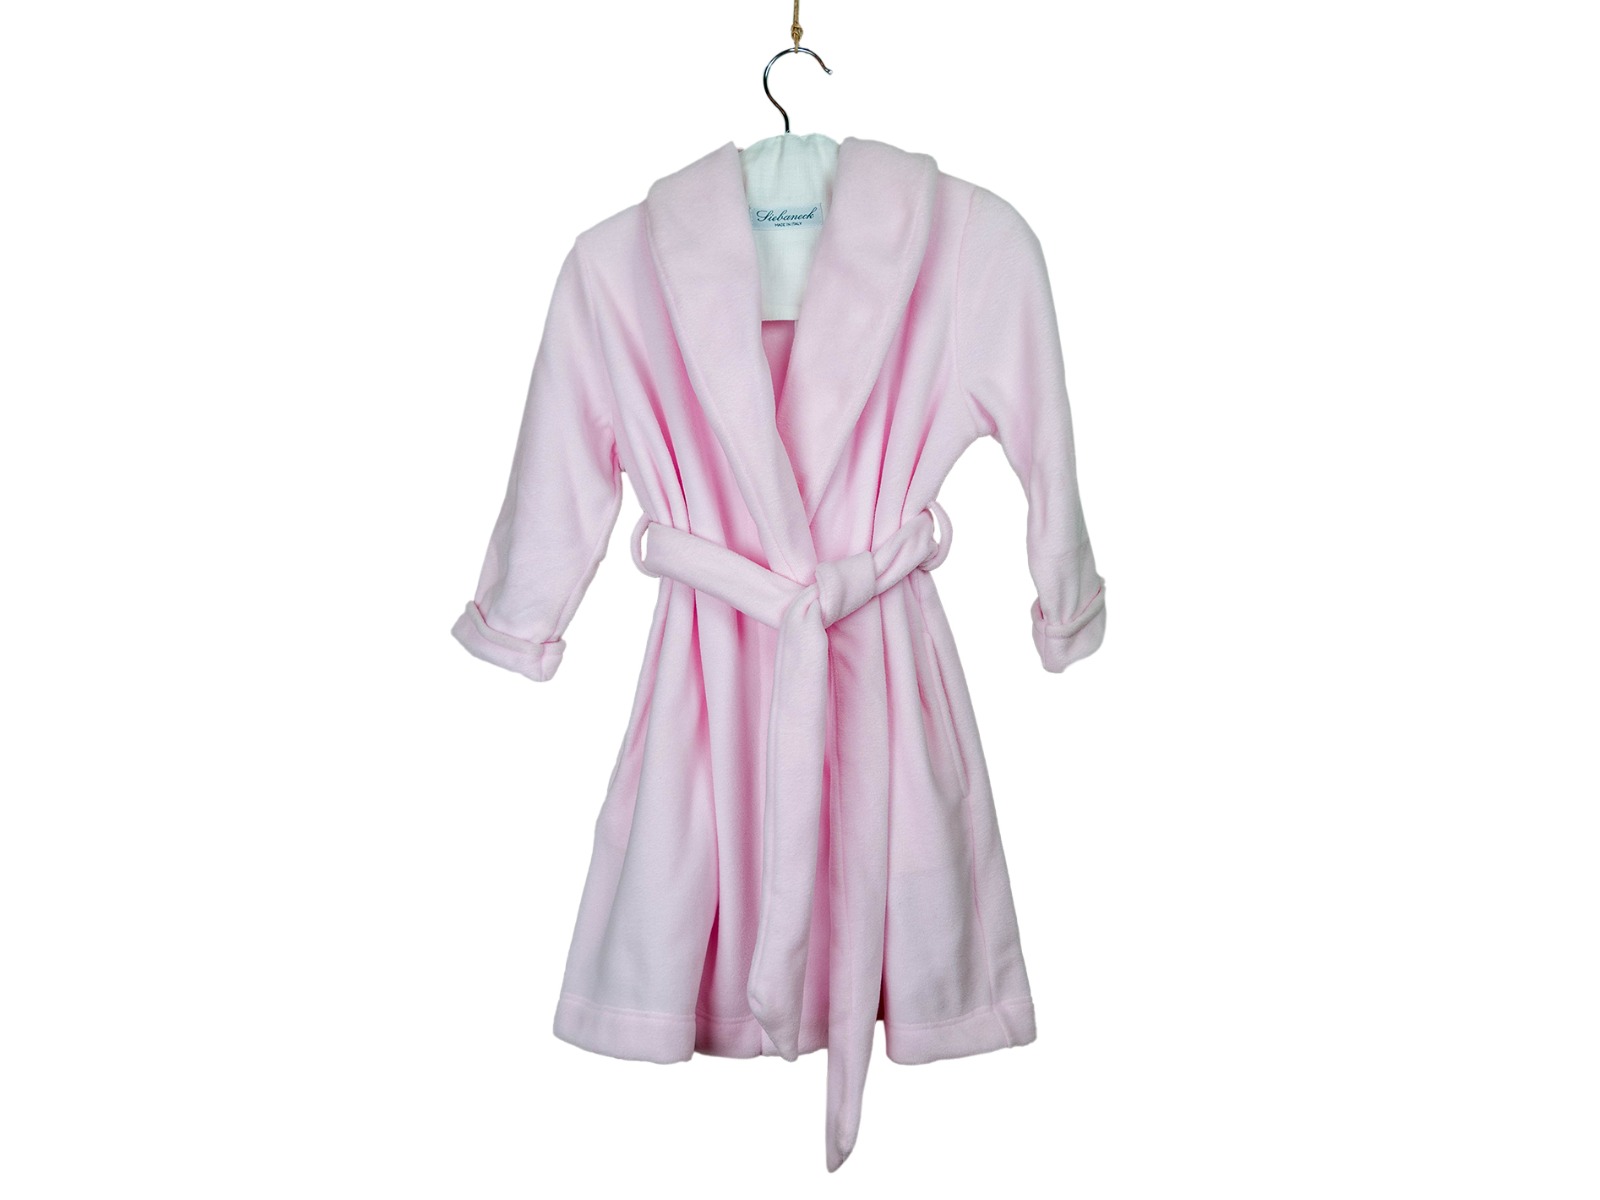 Siebaneck, i pigiami artigianali italiani: - bambina - mod. 11 Bis bambina rosa